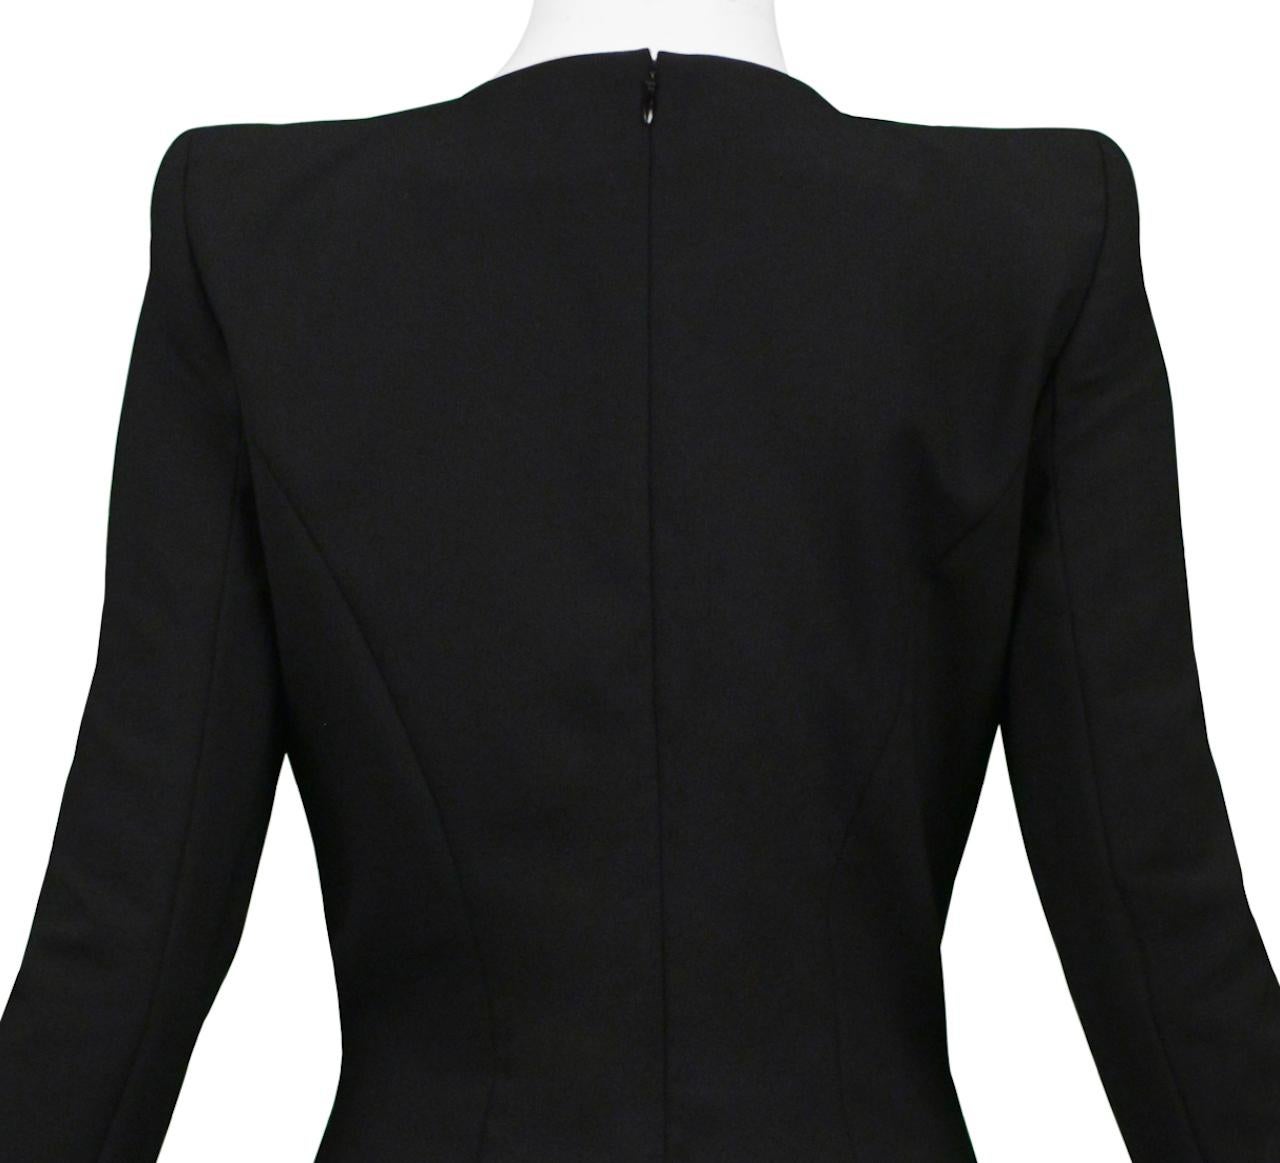 John Galliano Black Tuxedo Dress With Long Sleeves 1997 For Sale 1